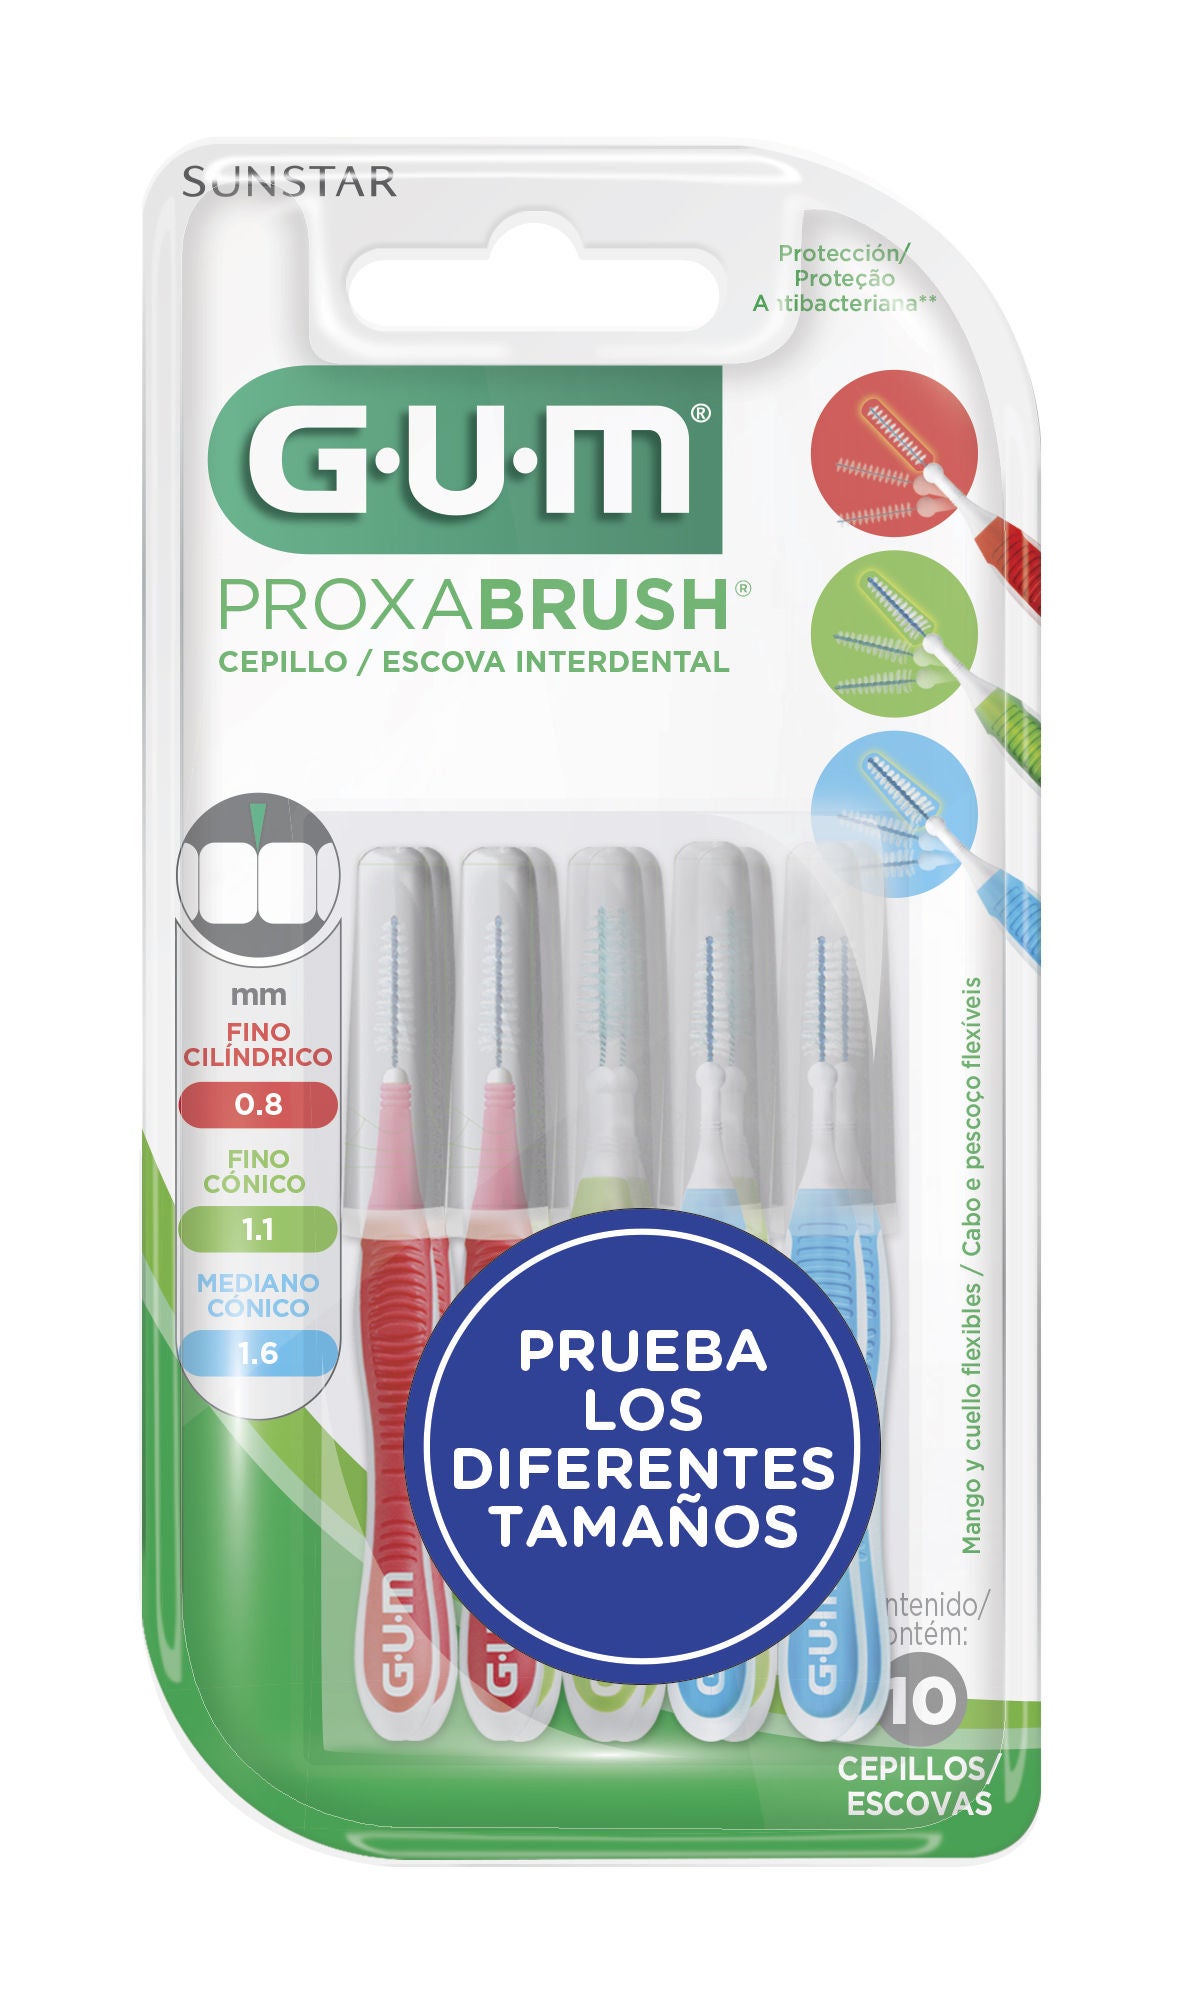 GUM PROXABRUSH Cepillos Interdentales Diferentes Tamaños 10 unidades 